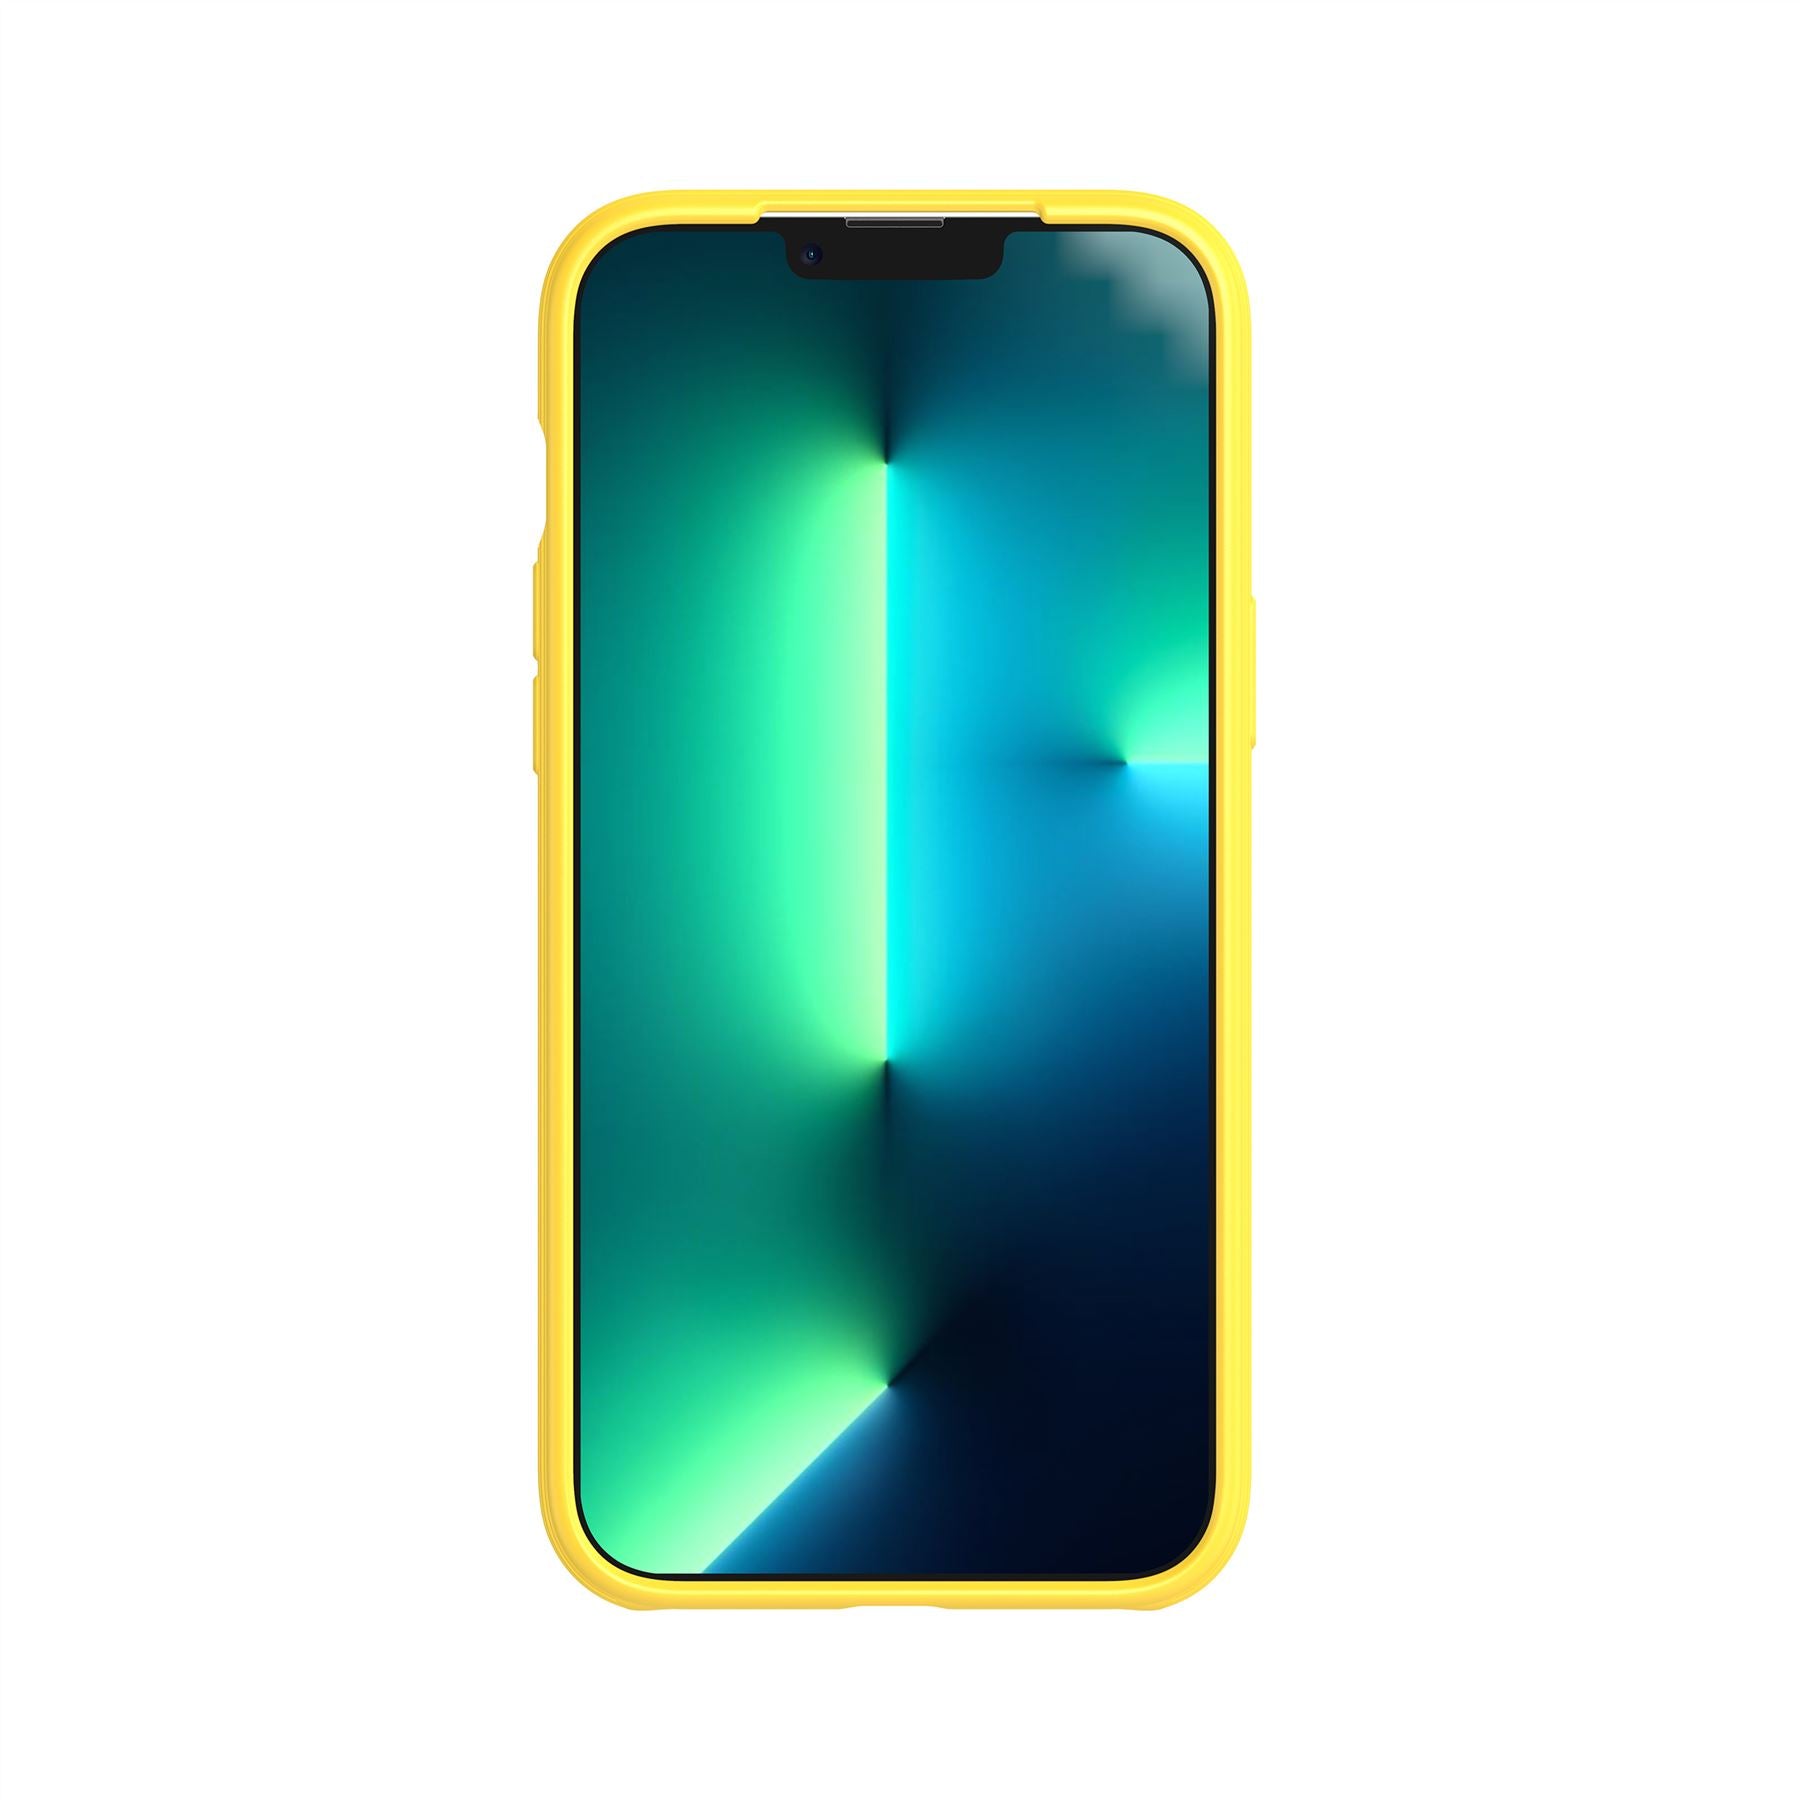 Evo Lite - Apple iPhone 13 Pro Max Case - Sunflower Yellow